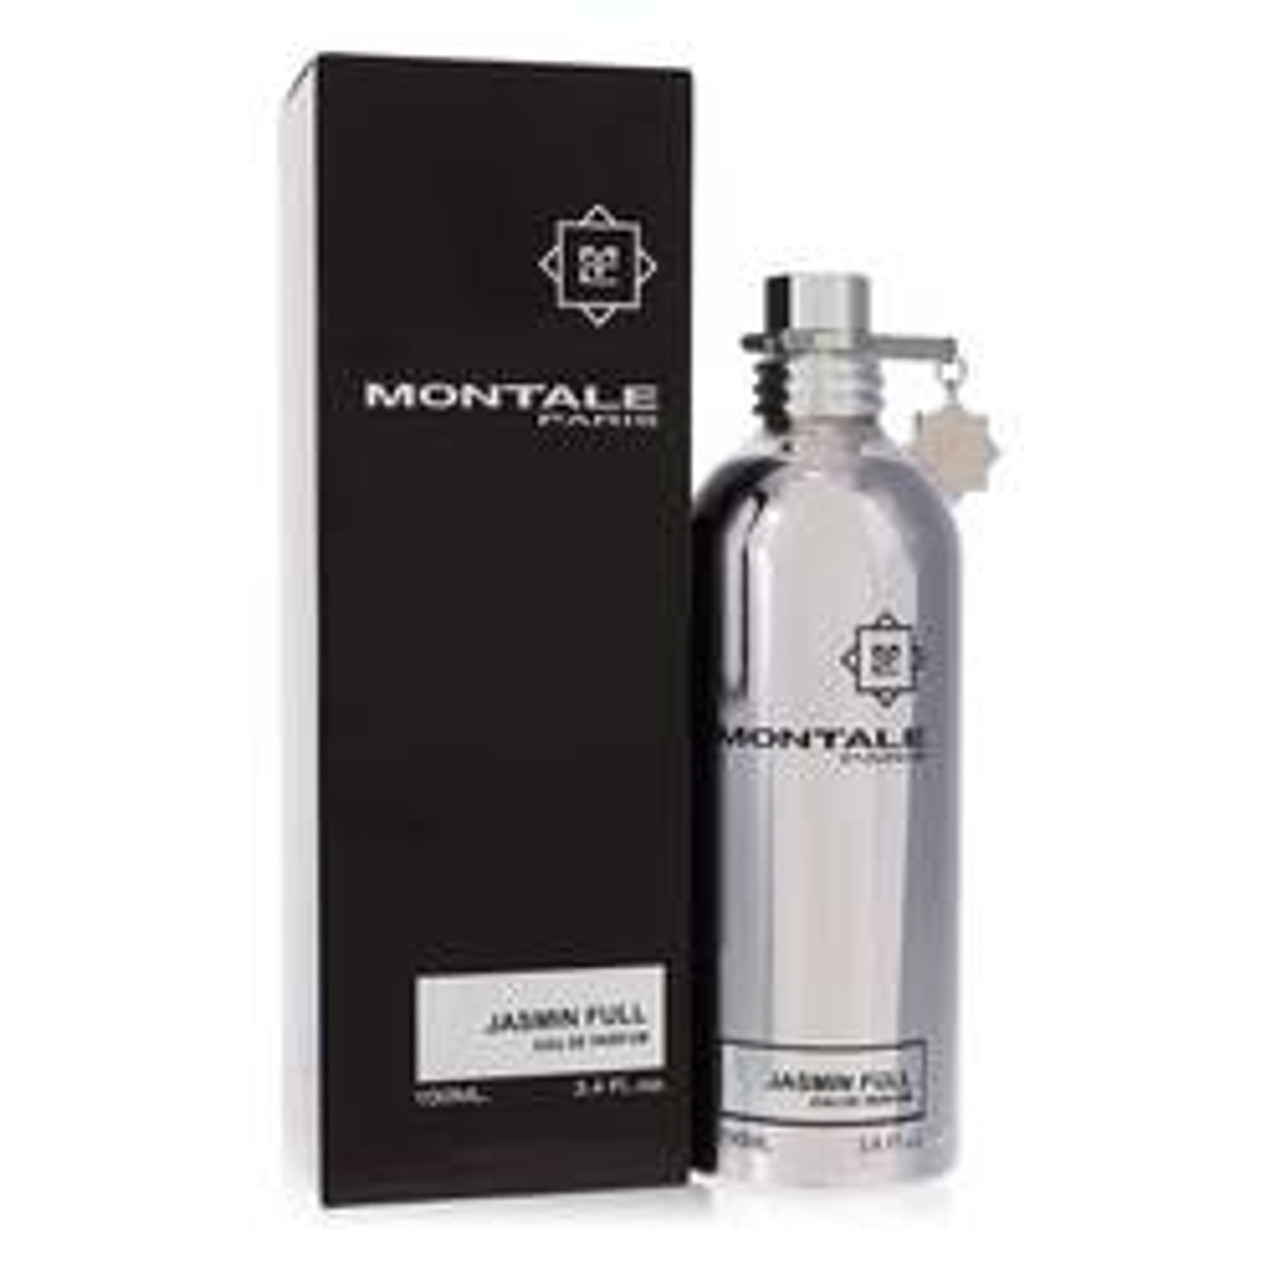 Montale Jasmin Full Perfume By Montale Eau De Parfum Spray 3.3 oz for Women - *Pre-Order